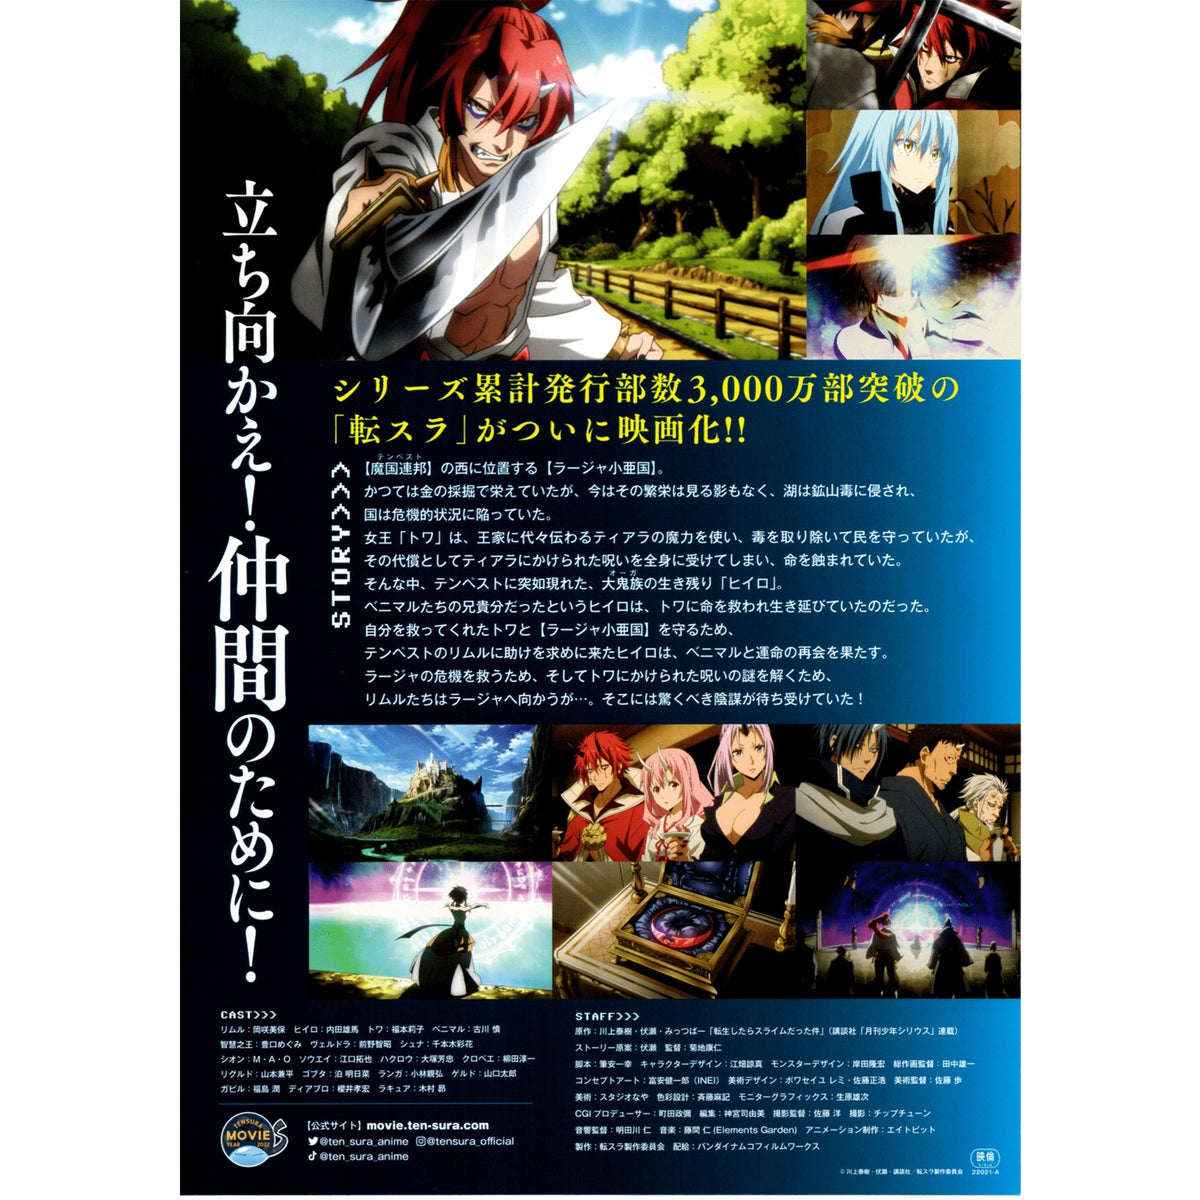 Official Trailer Tensei Shitara Slime Datta Ken Movie ( Season 3